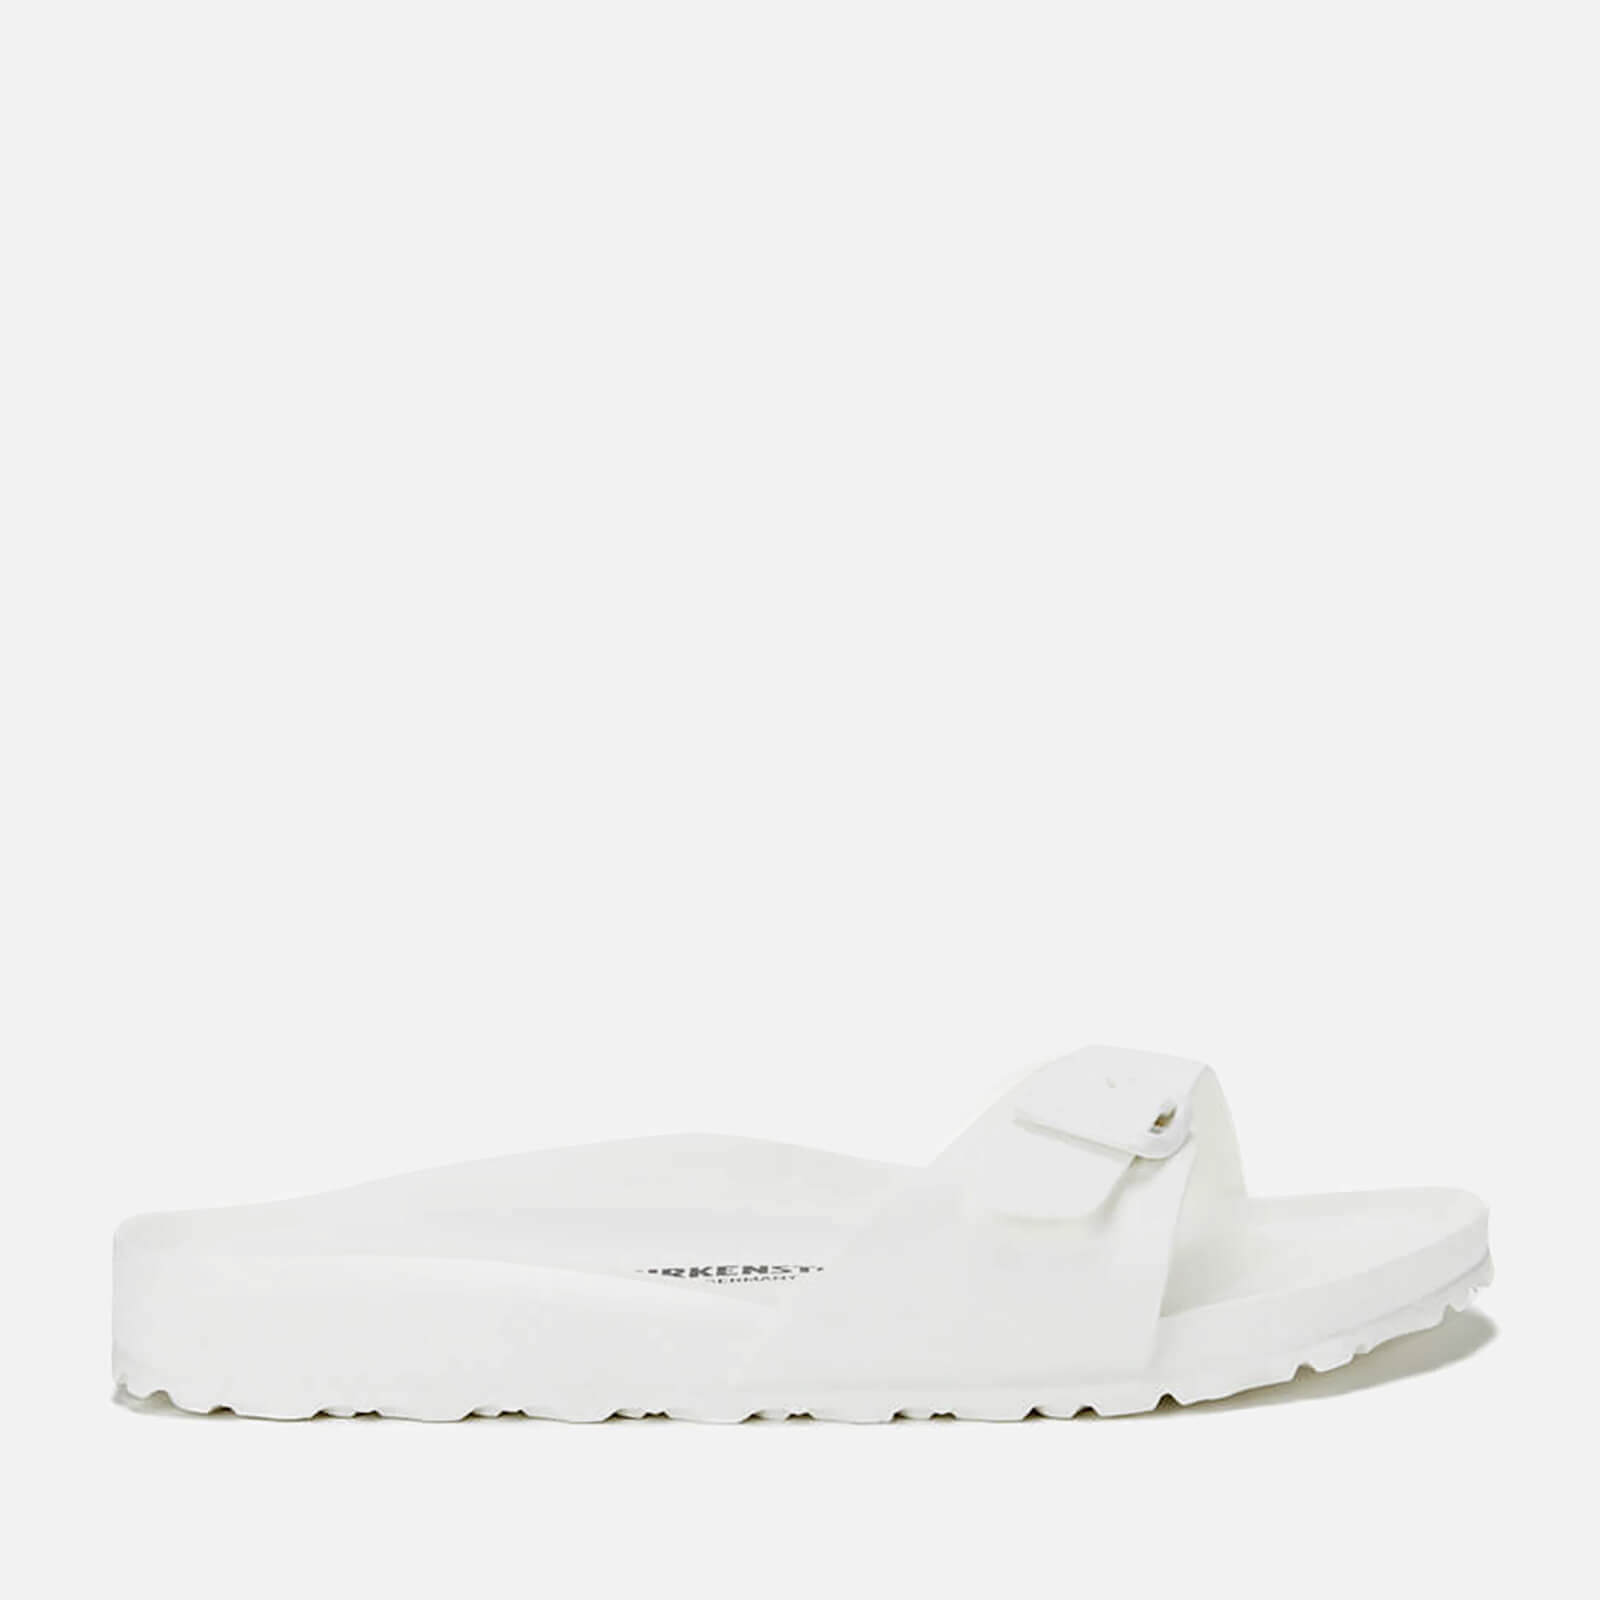 Birkenstock Women’s Madrid Slim Fit Eva Single Strap Sandals - White